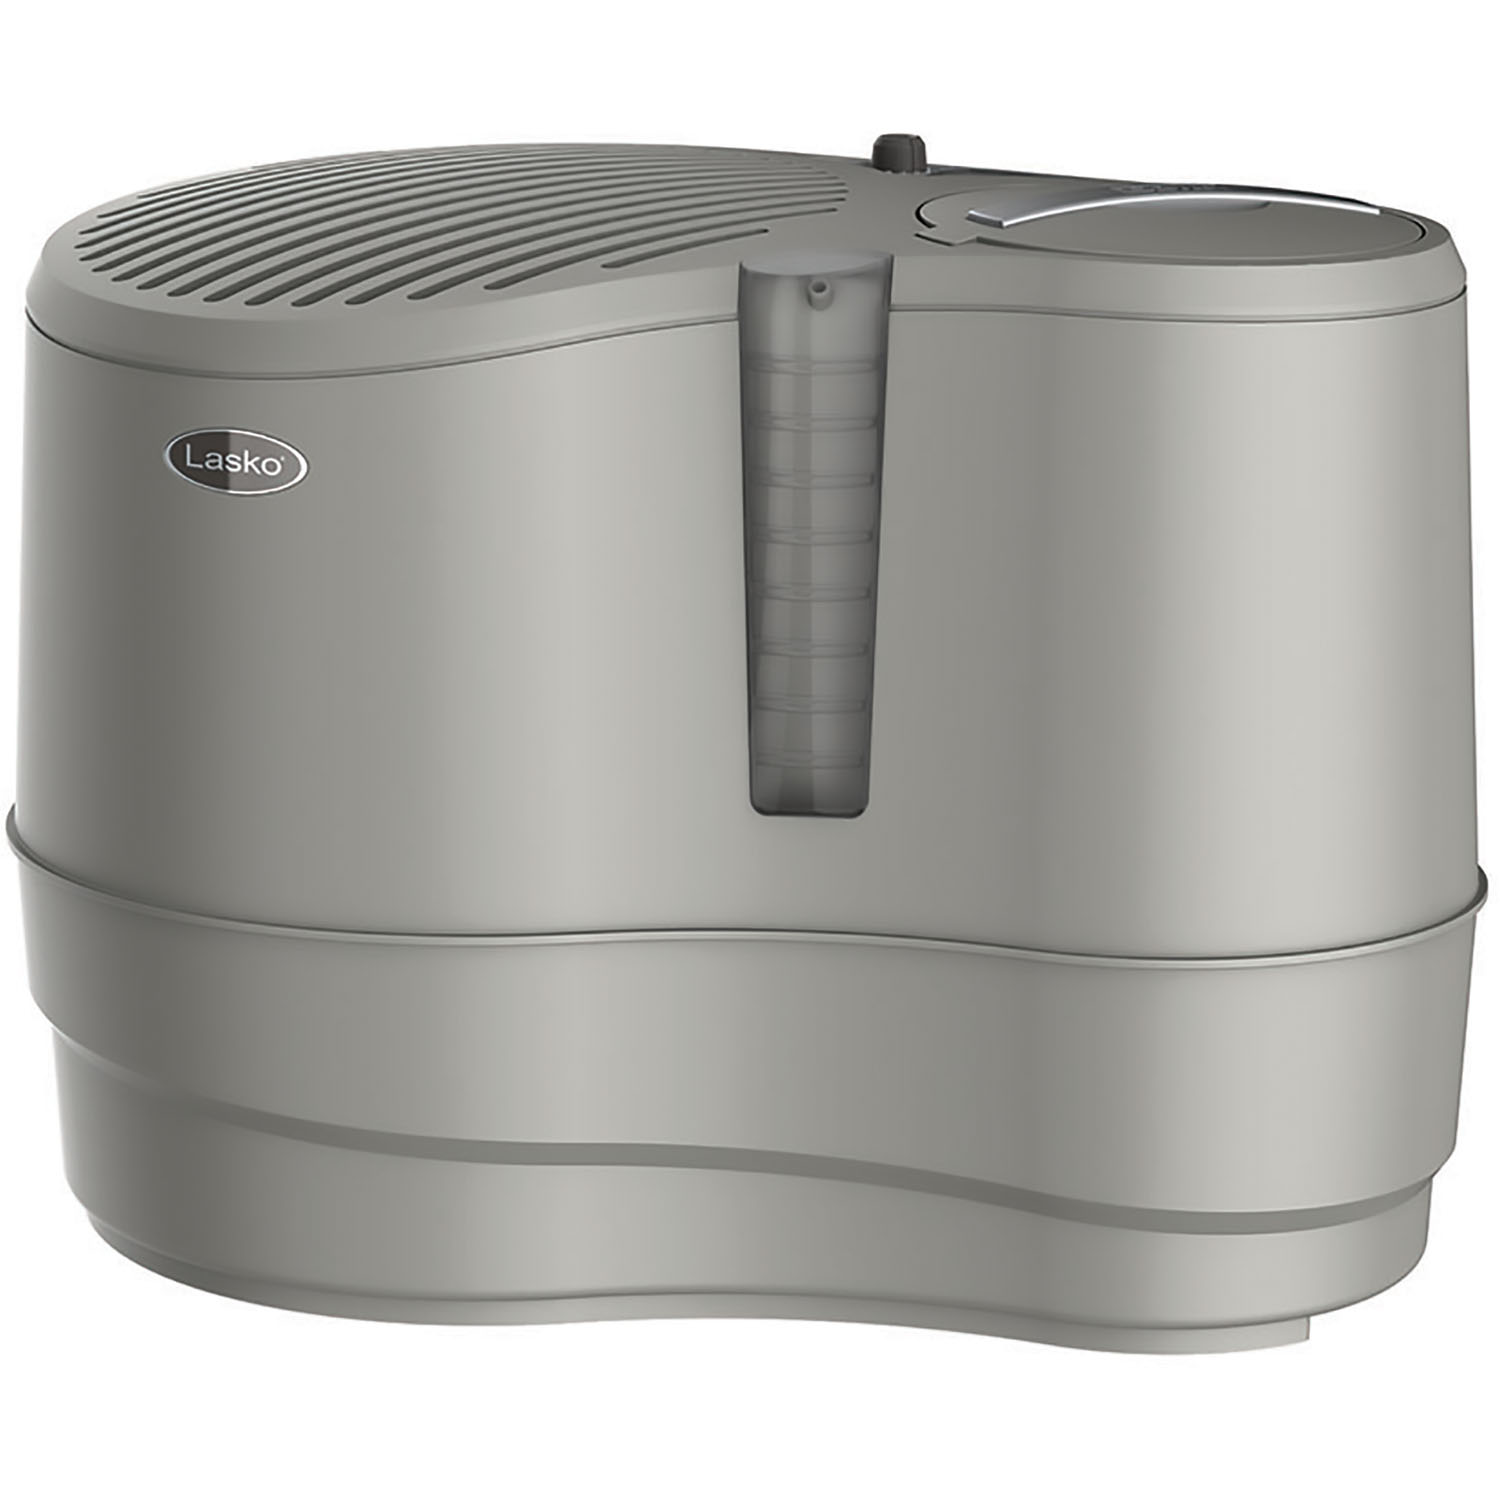 Lasko 9-Gallon Recirculating Humidifier with Humidistat